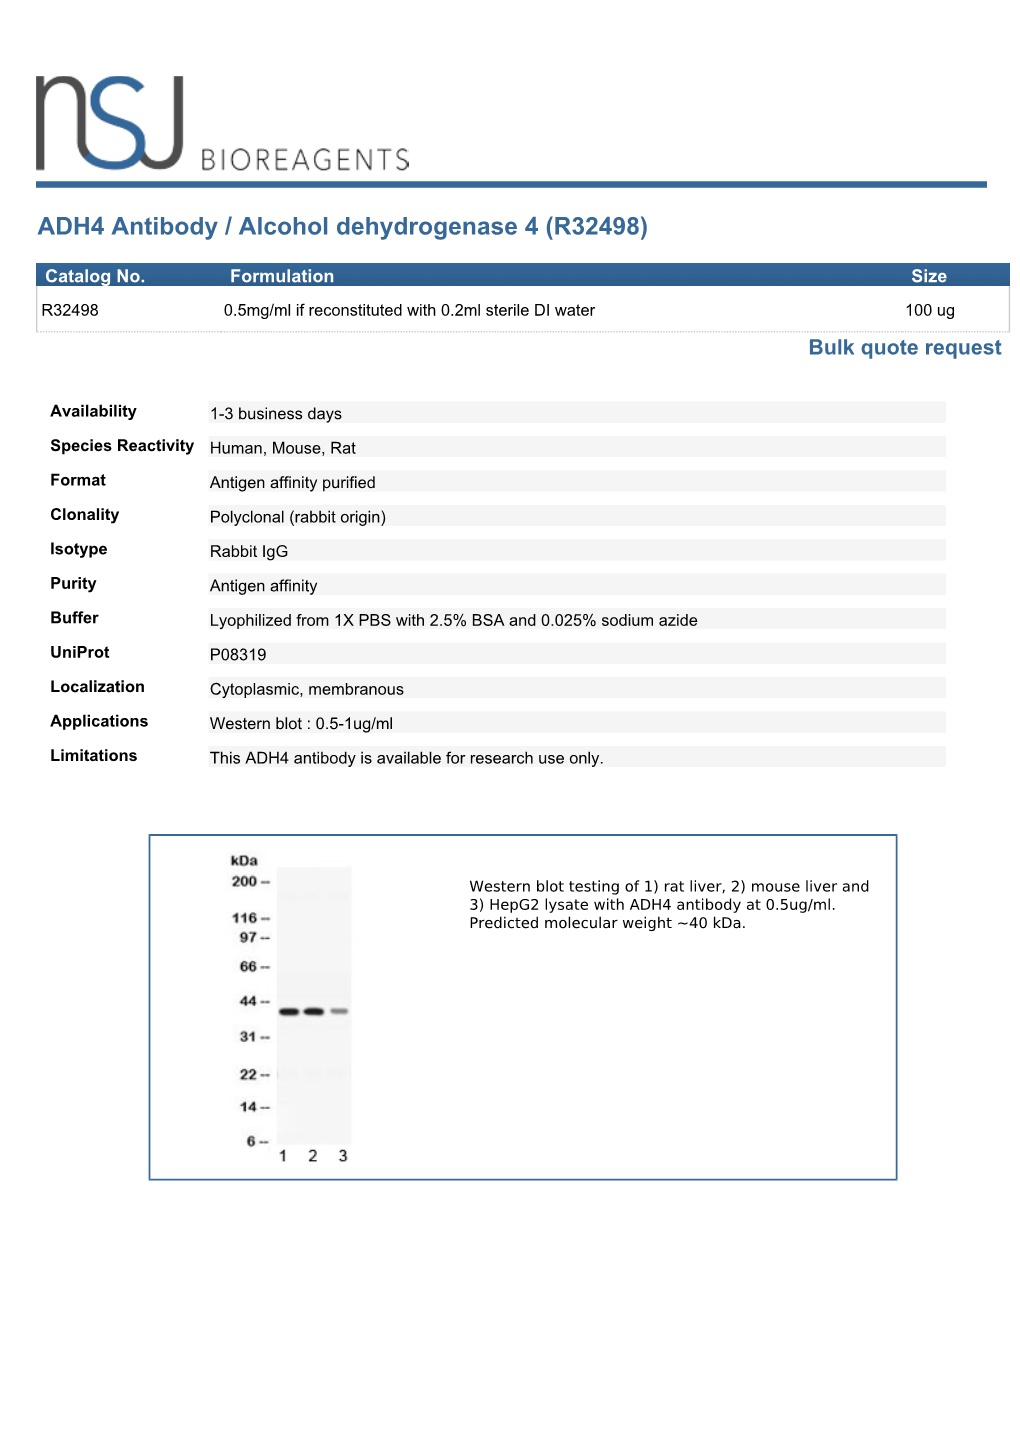 ADH4 Antibody / Alcohol Dehydrogenase 4 (R32498)